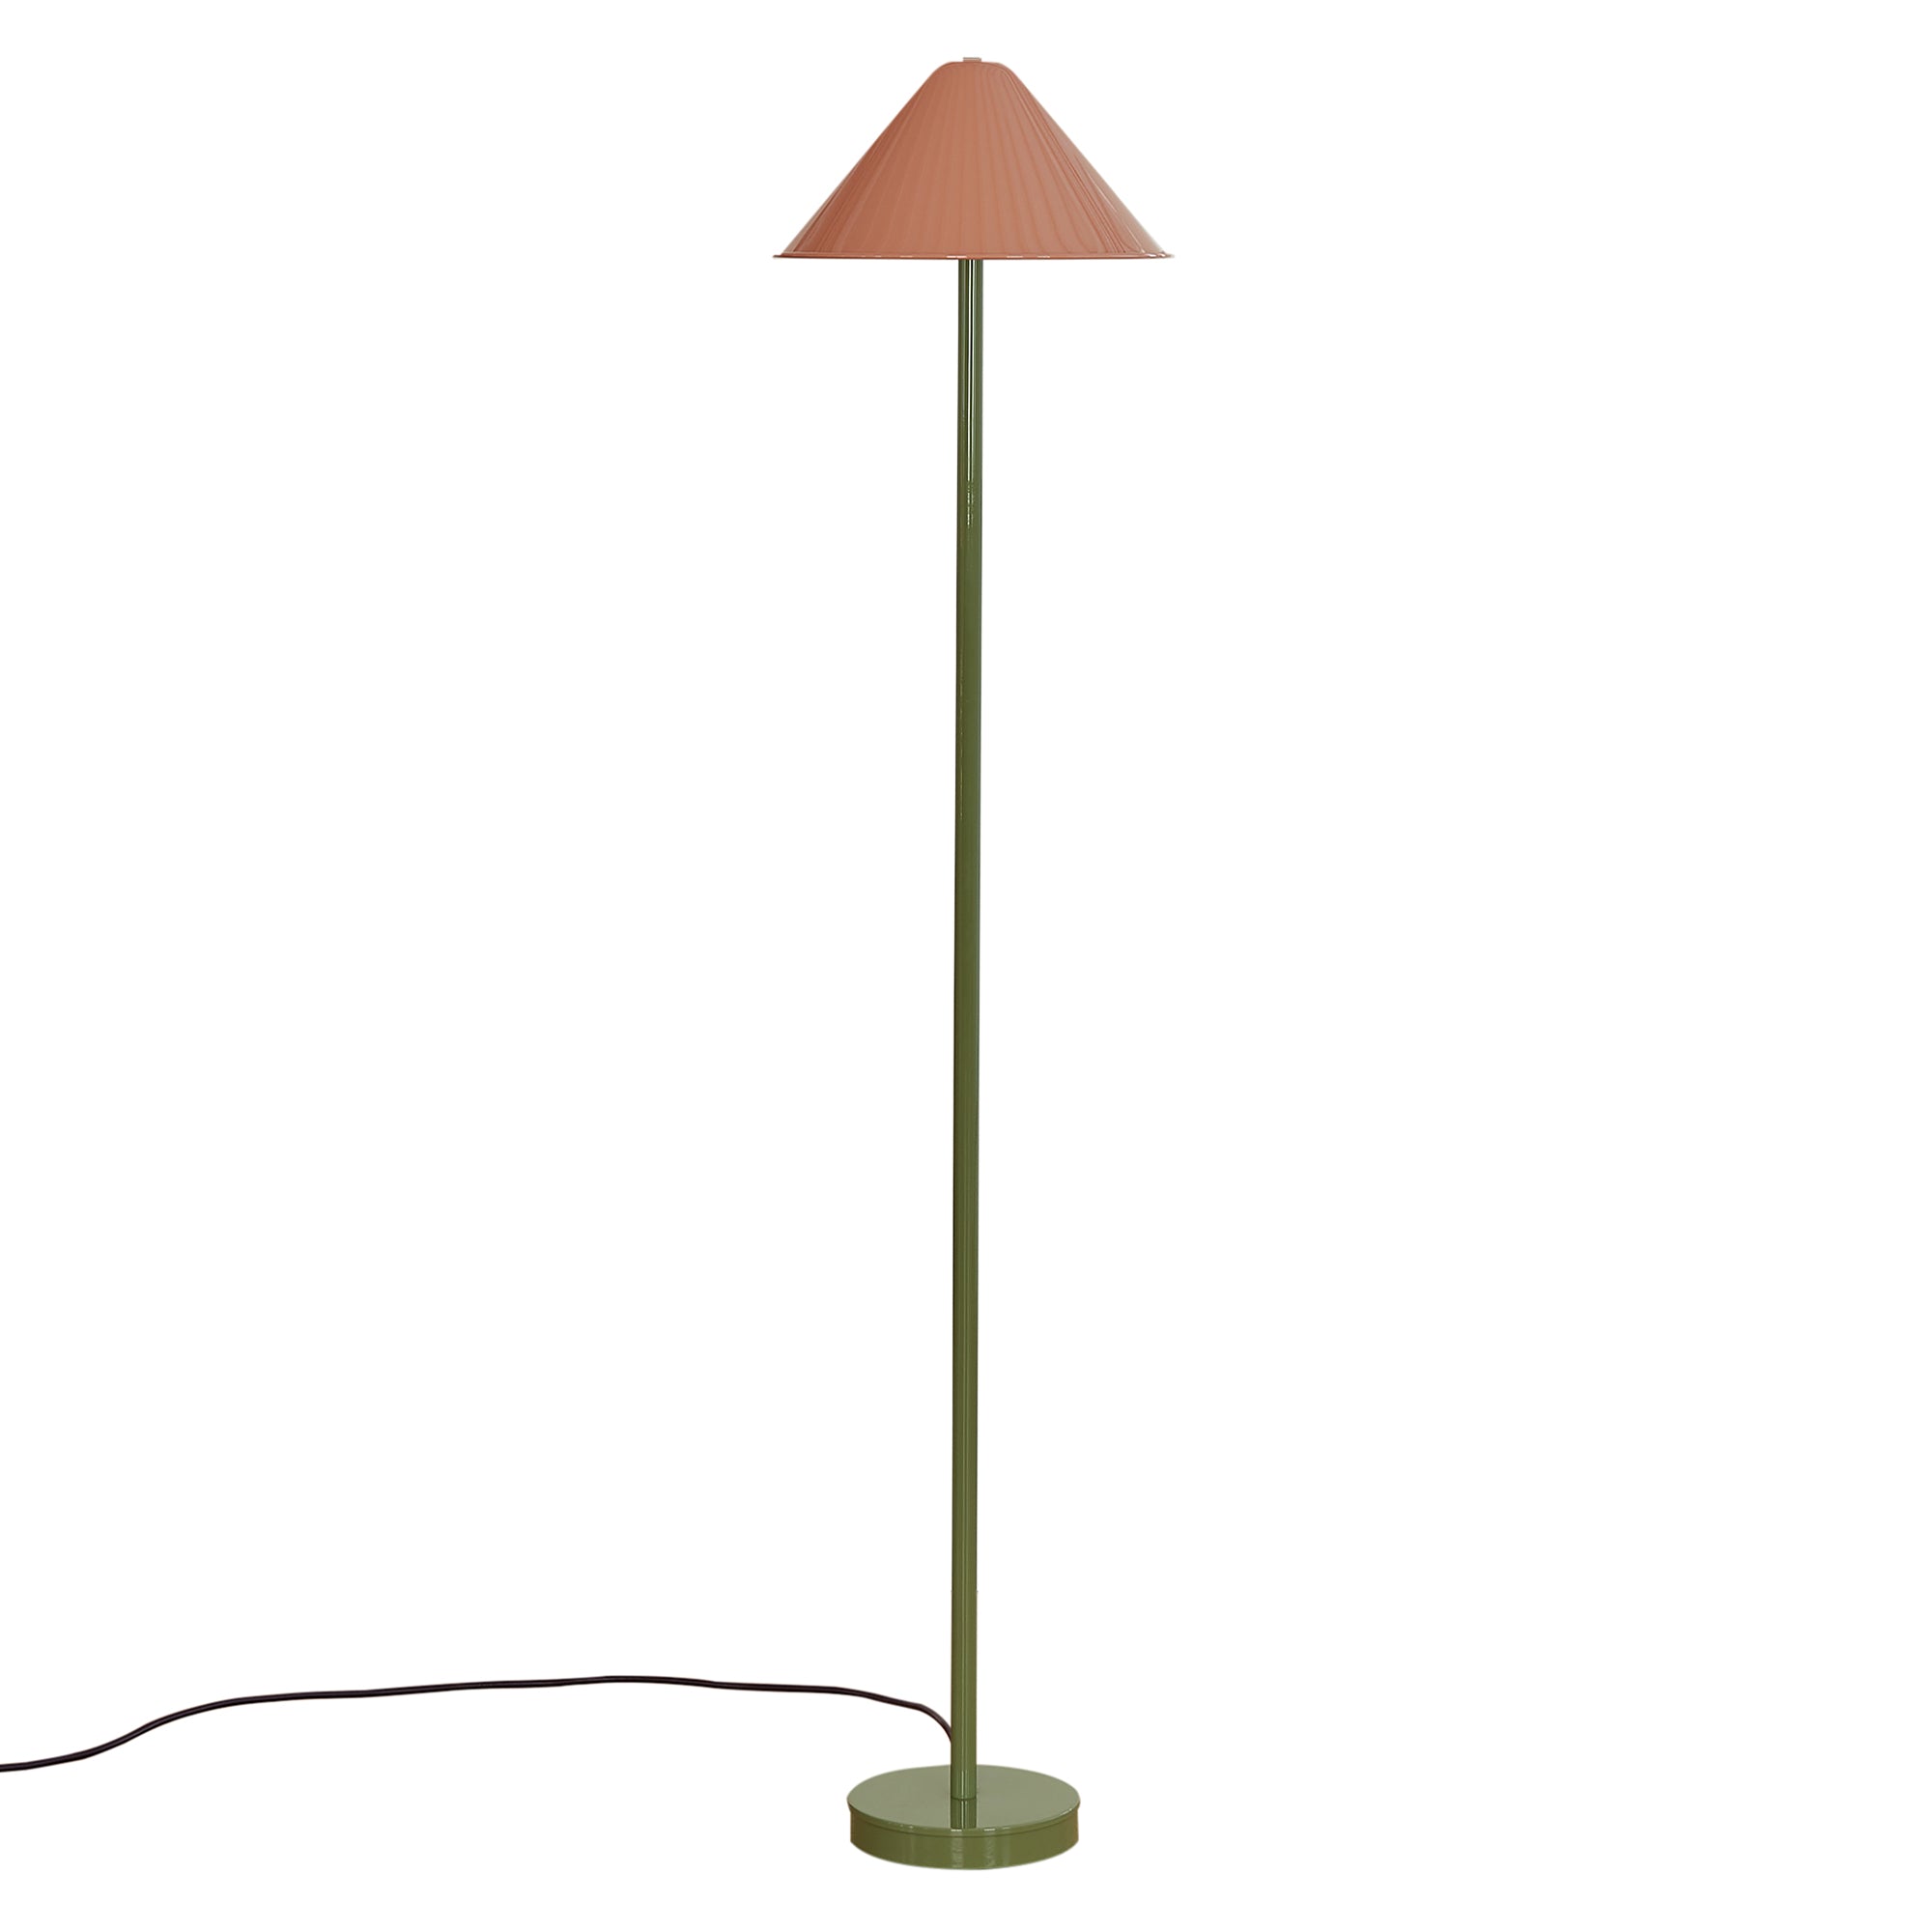 Tipi Floor Lamp: Peach + Reed Green